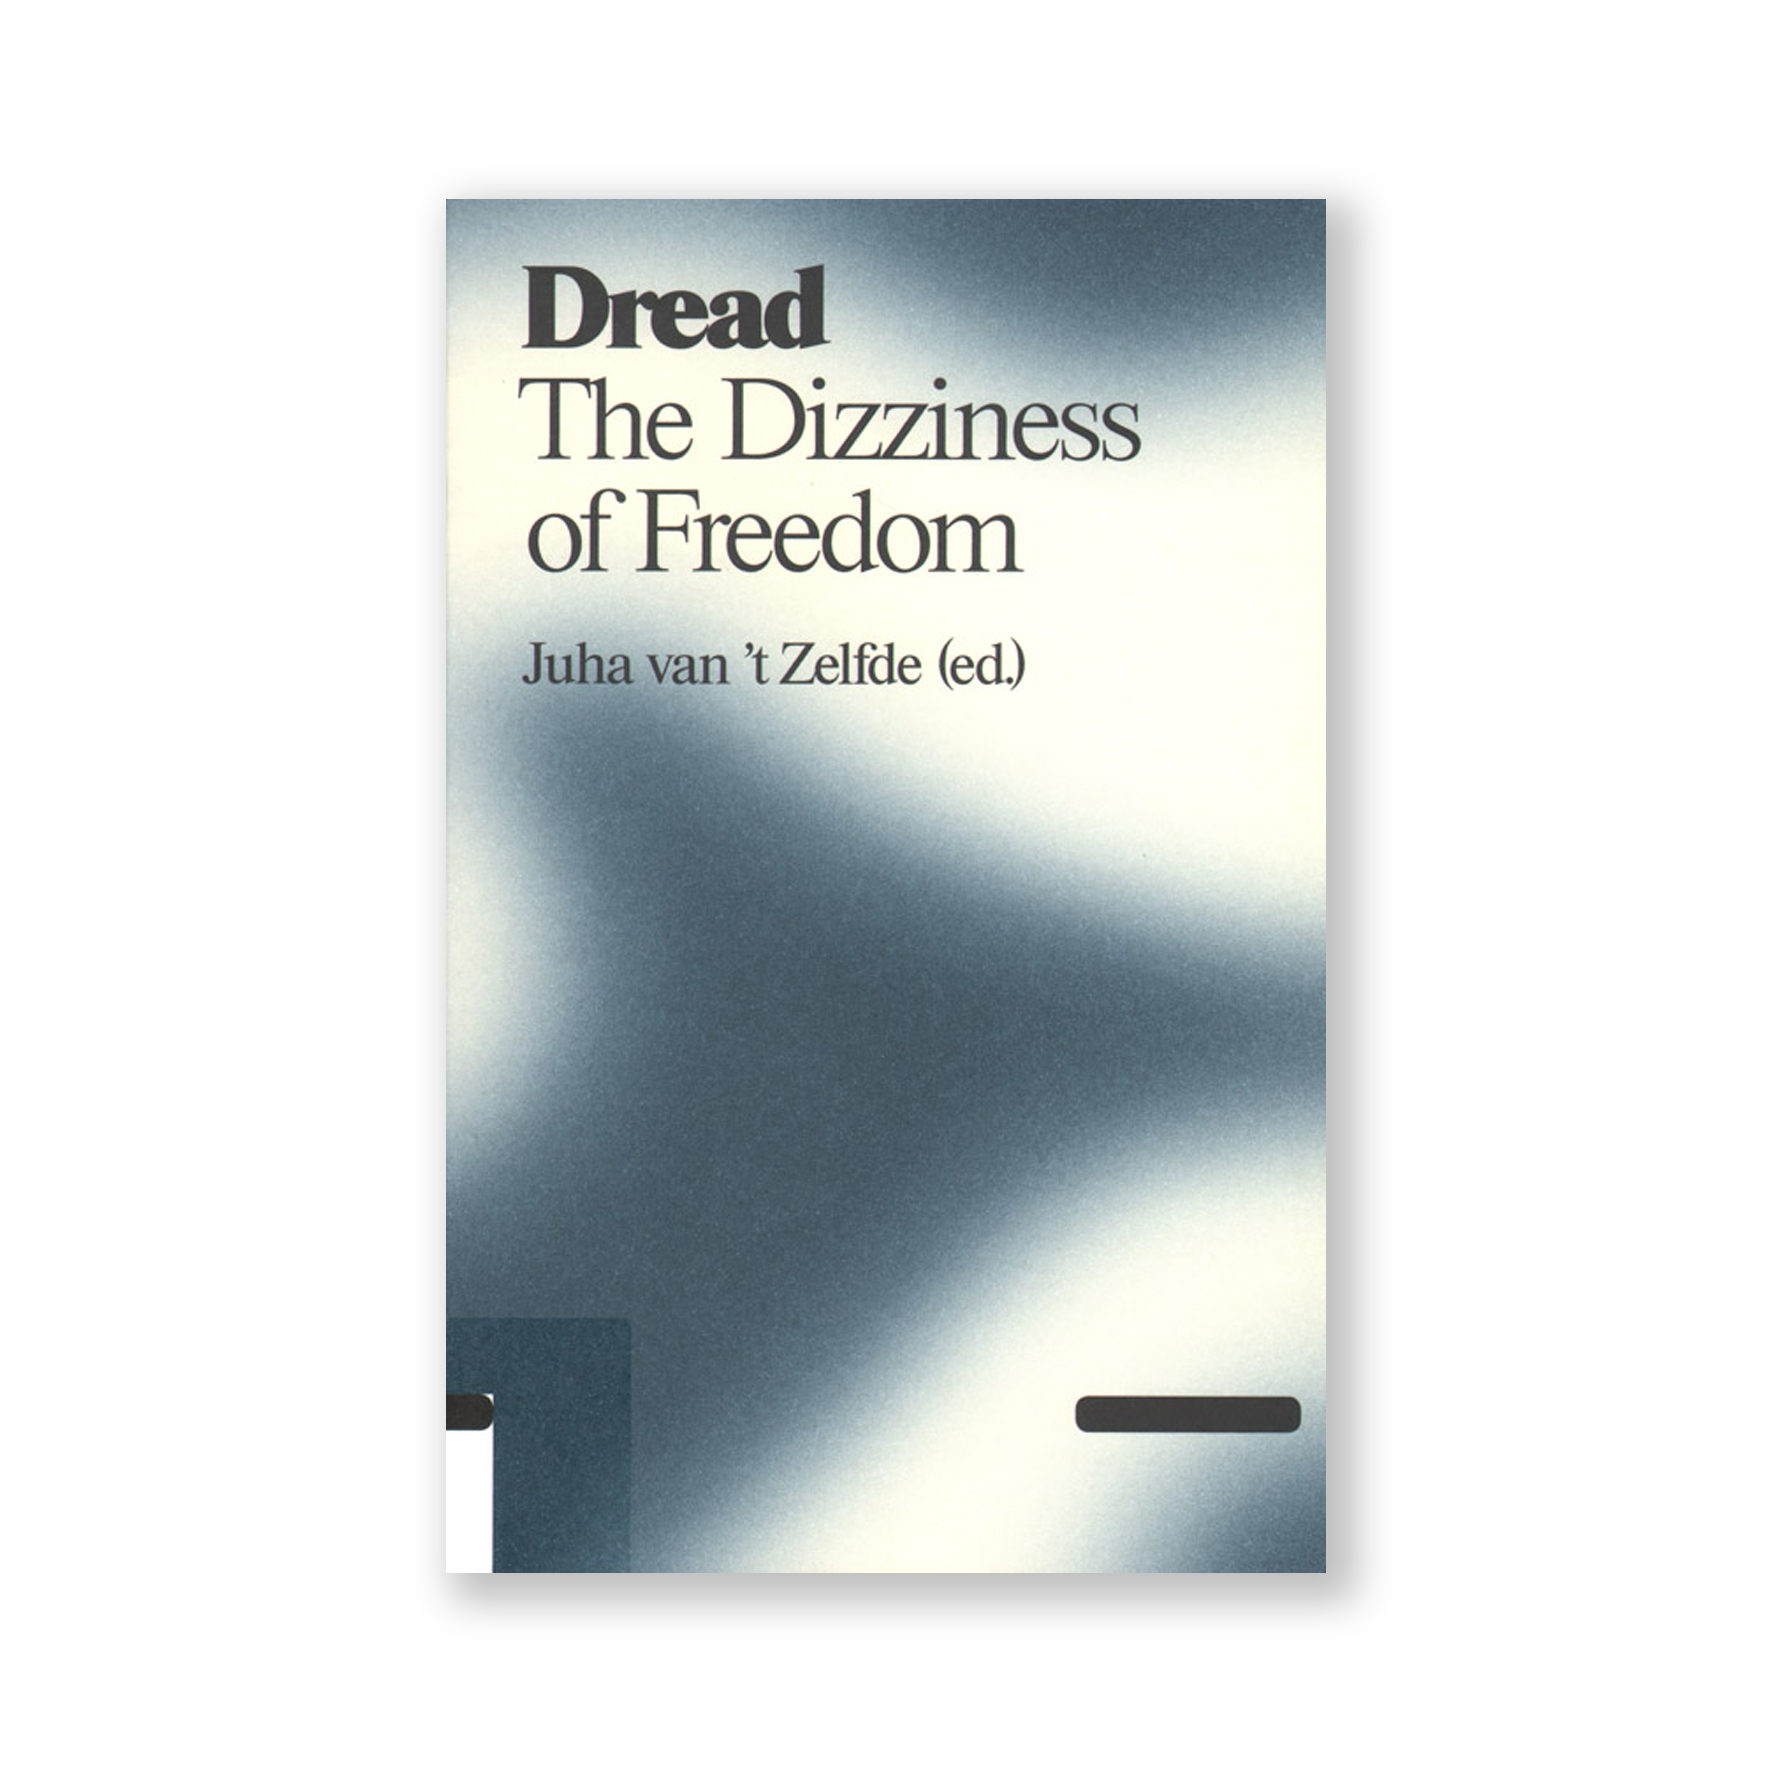 Dread The Dizziness of freedom